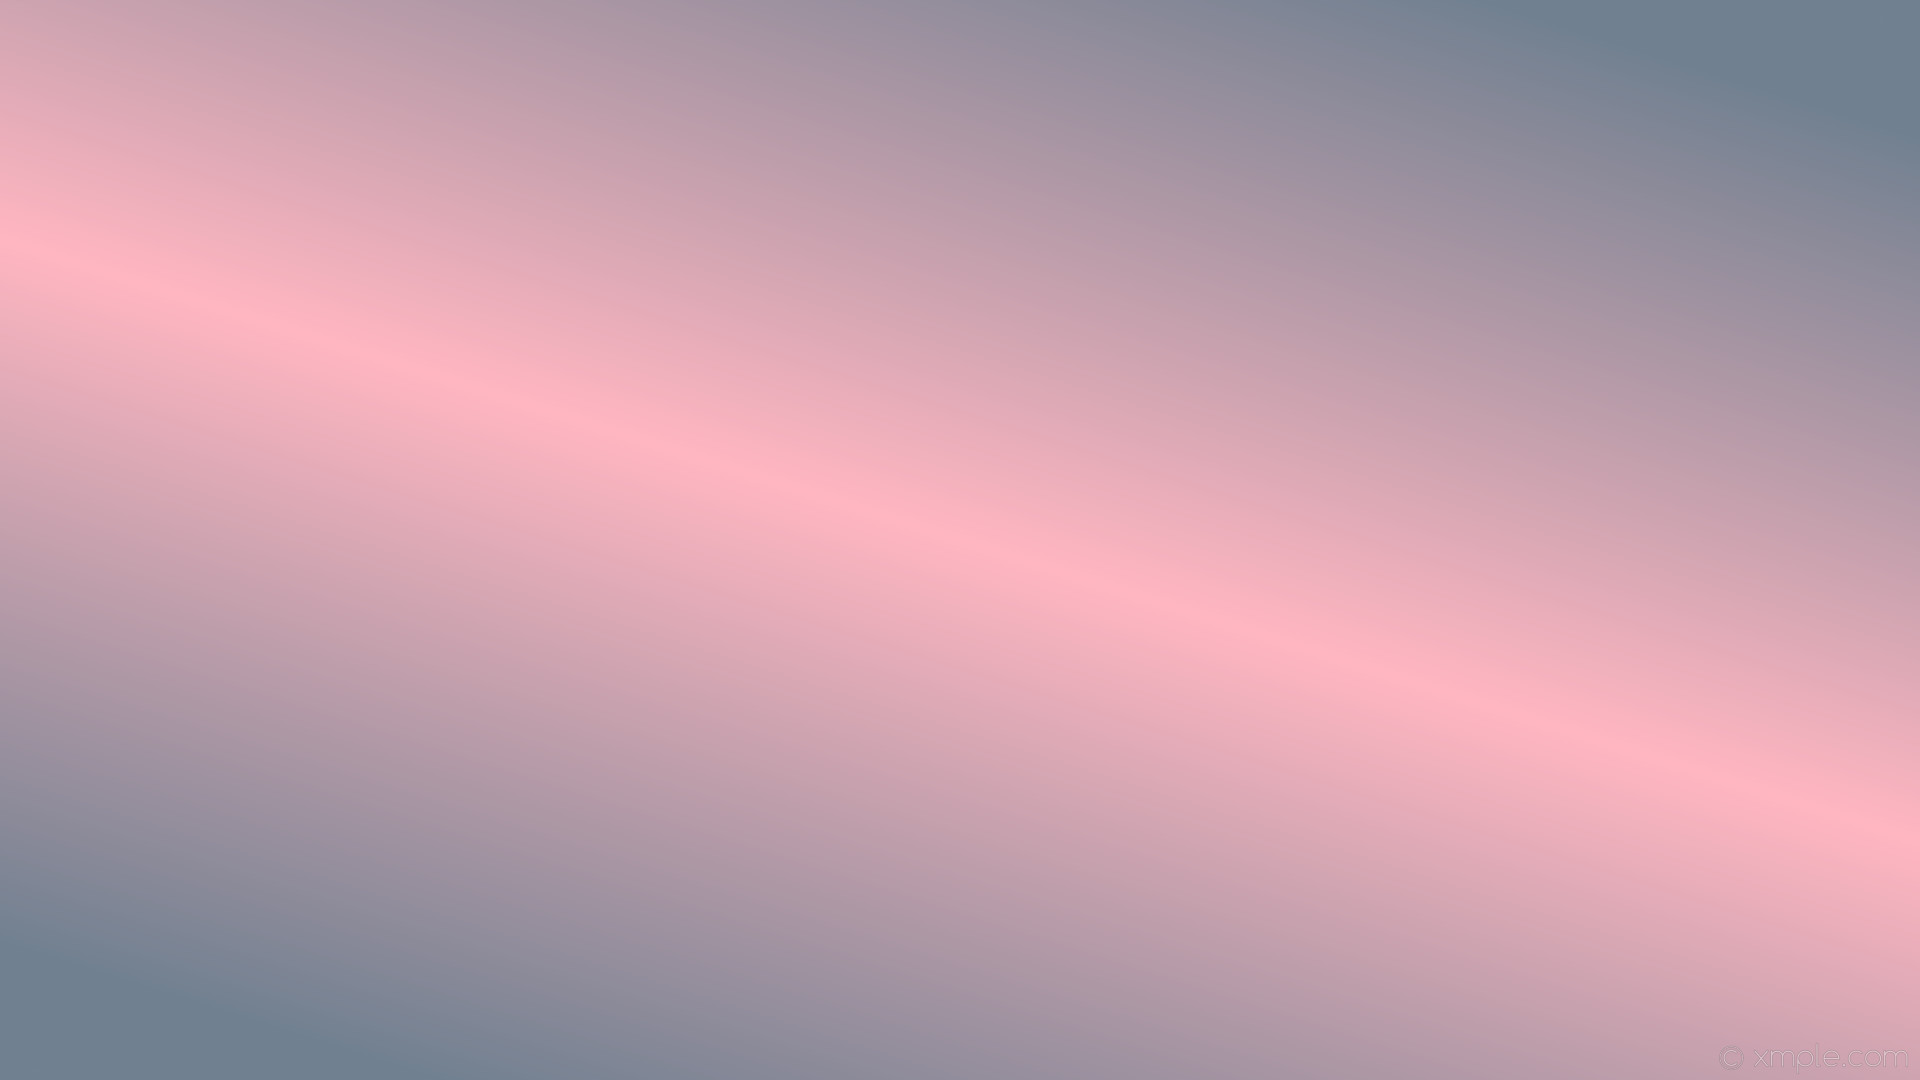 Wallpaper linear highlight pink gradient grey slate gray light pink #ffb6c1 45